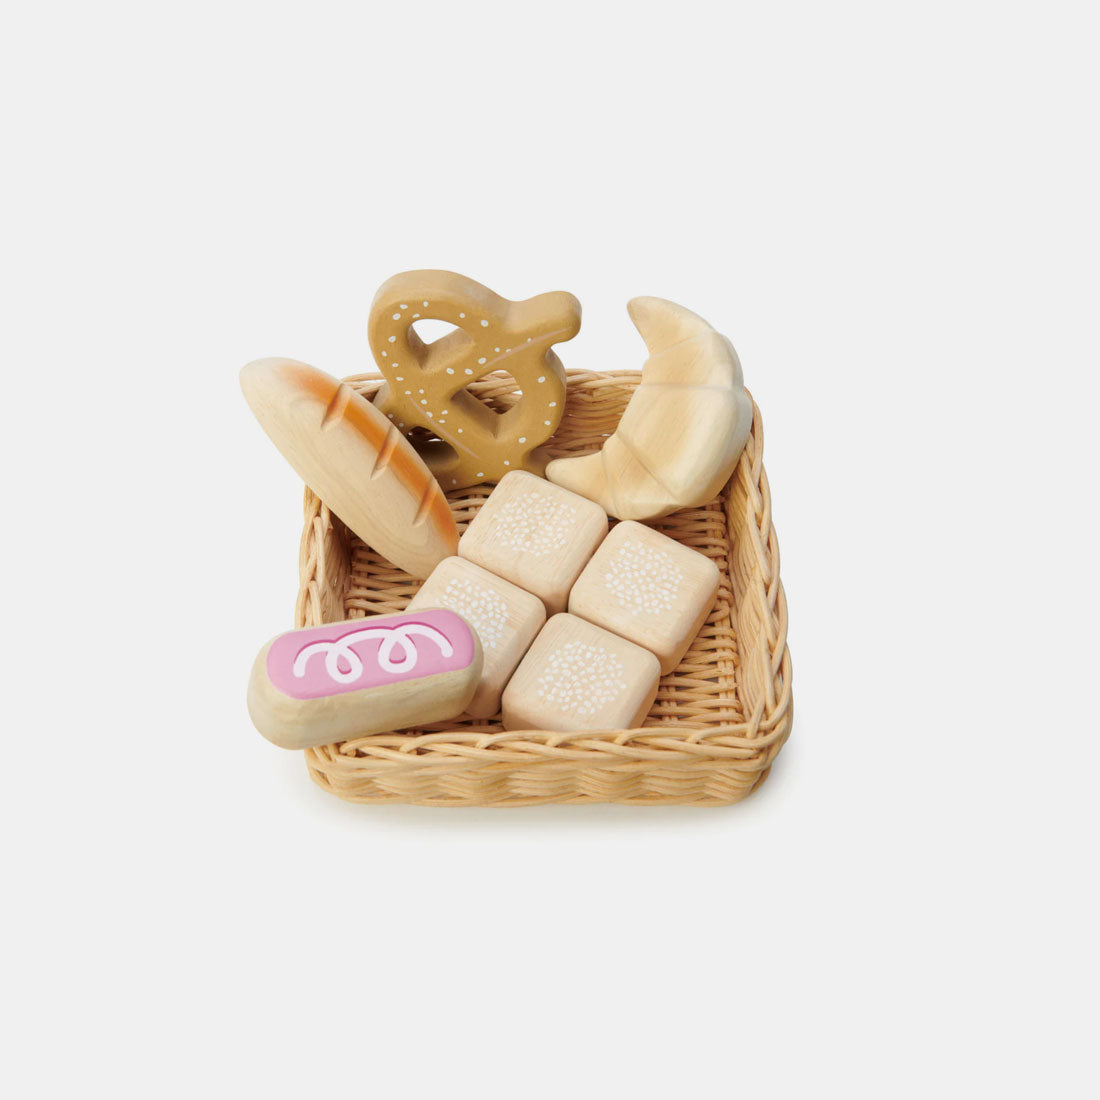 Wooden Play Food - Bread Basket